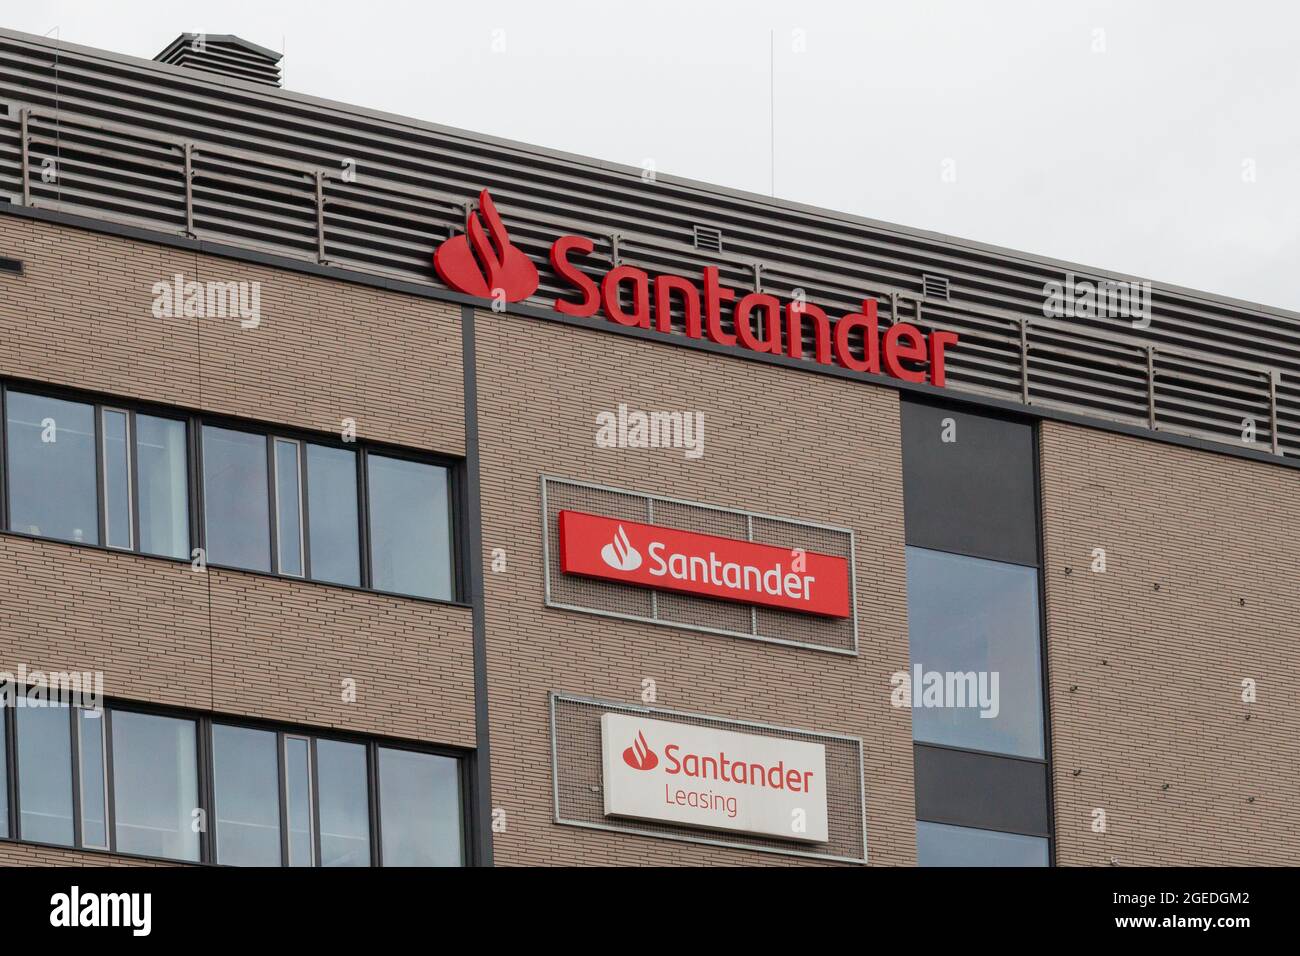 Polonia, Poznan - Agosto 18 2021: Logo Santander nell'edificio della banca Santander. Santander è una banca spagnola. Foto Stock